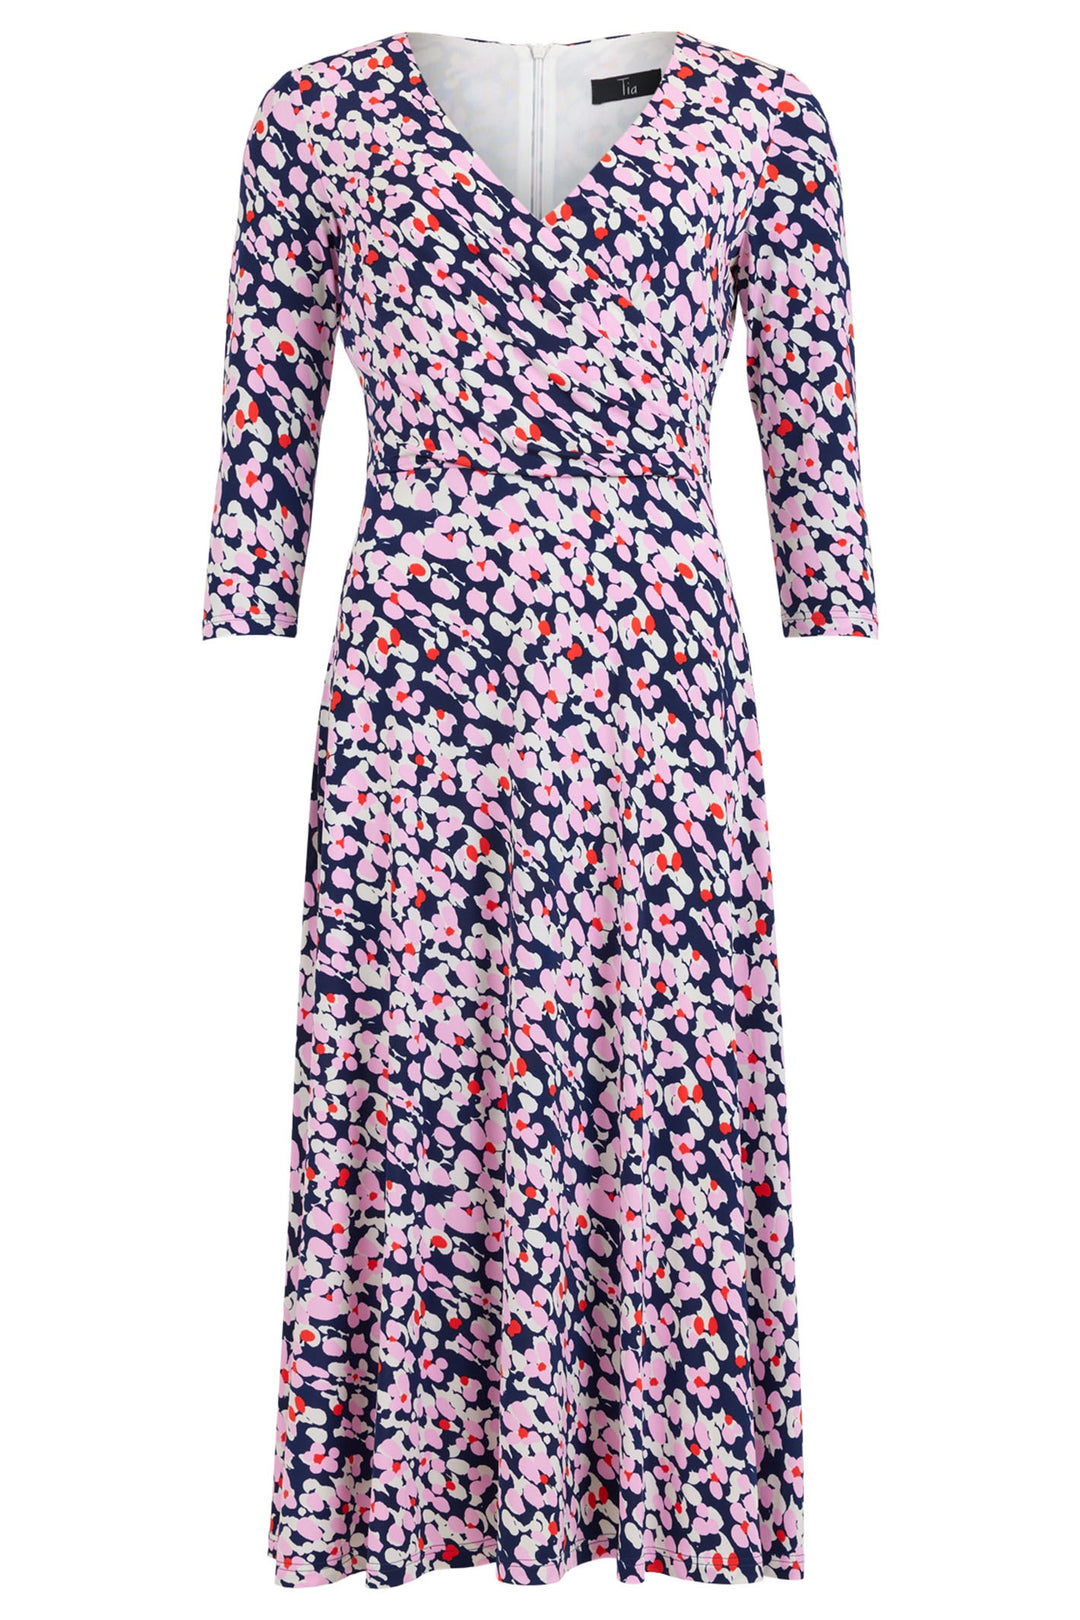 Tia 78548 7816 51 Navy Pink Abstract Floral Print Dress - Dotique